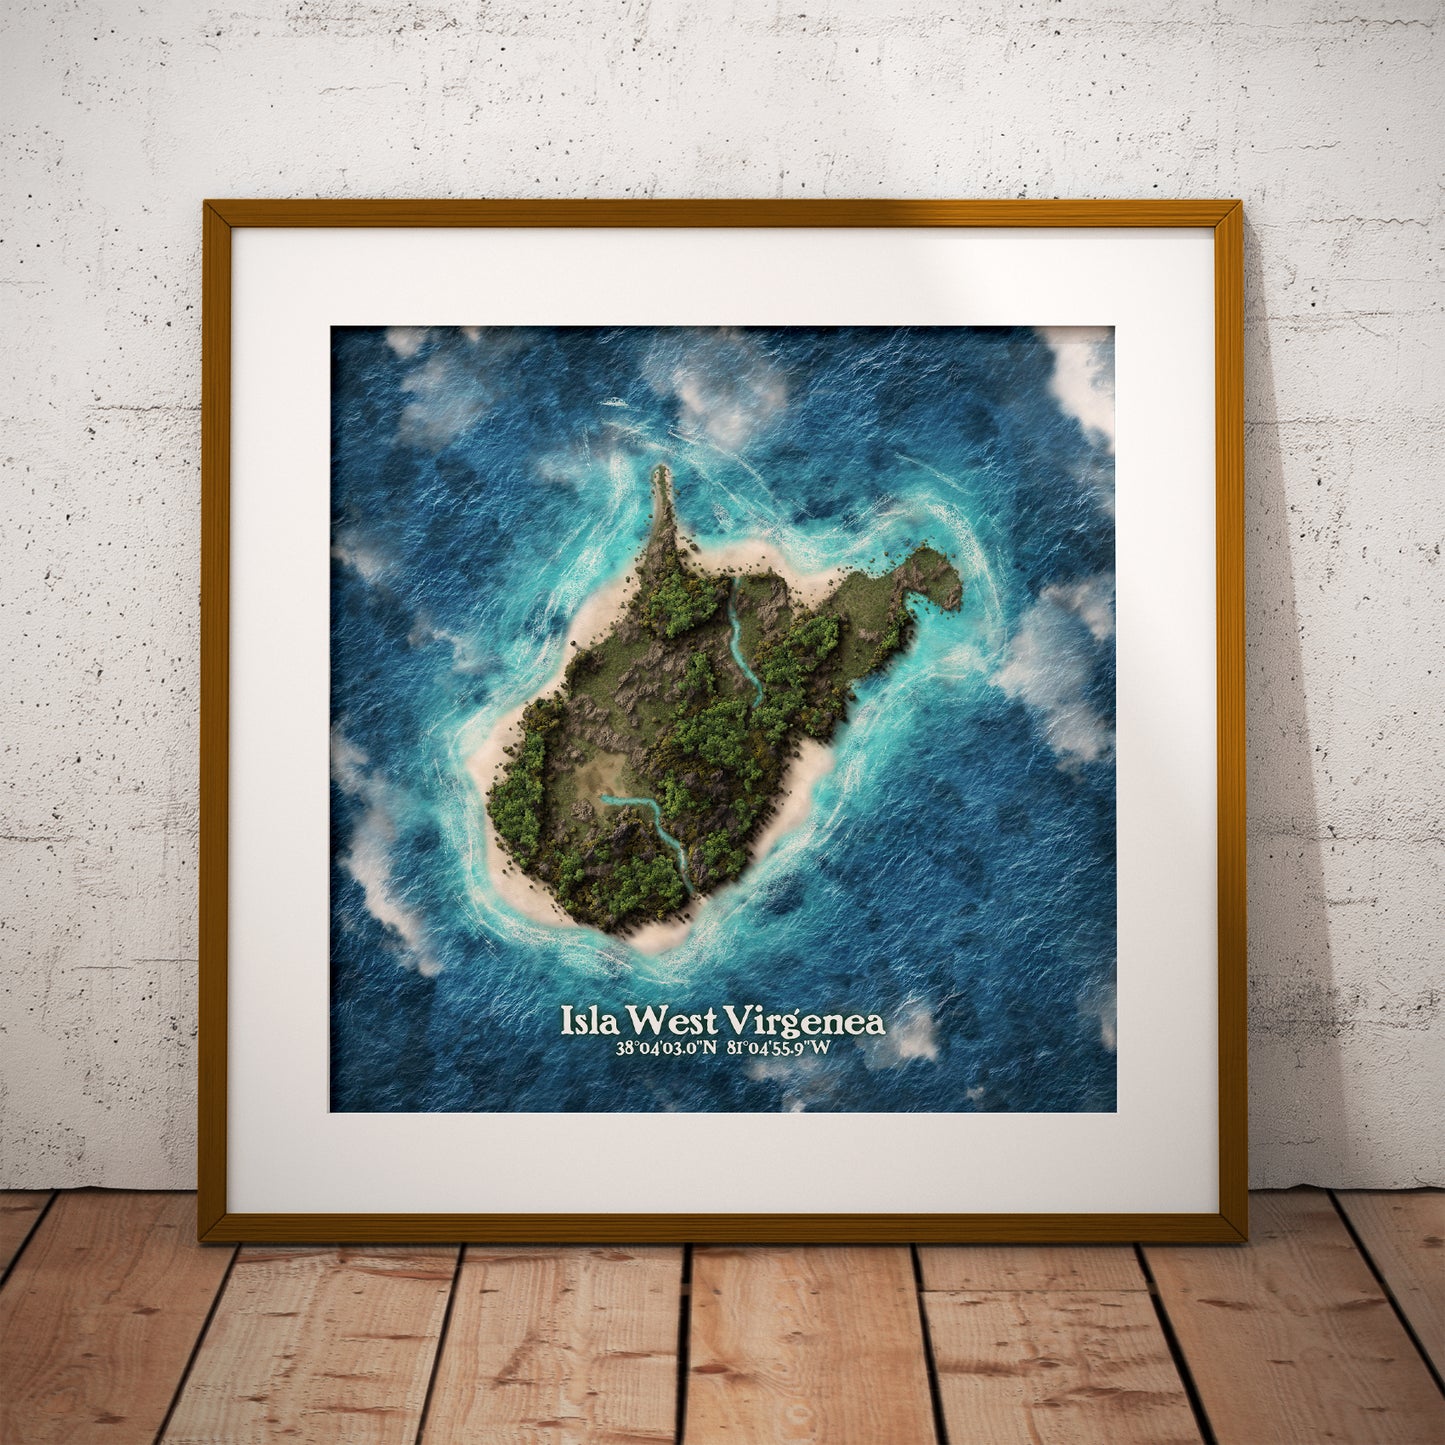 West Virginia state as an island print (Isla West Virgenea), Wv, Wvu, Novelty art - imagine your state as a desert island